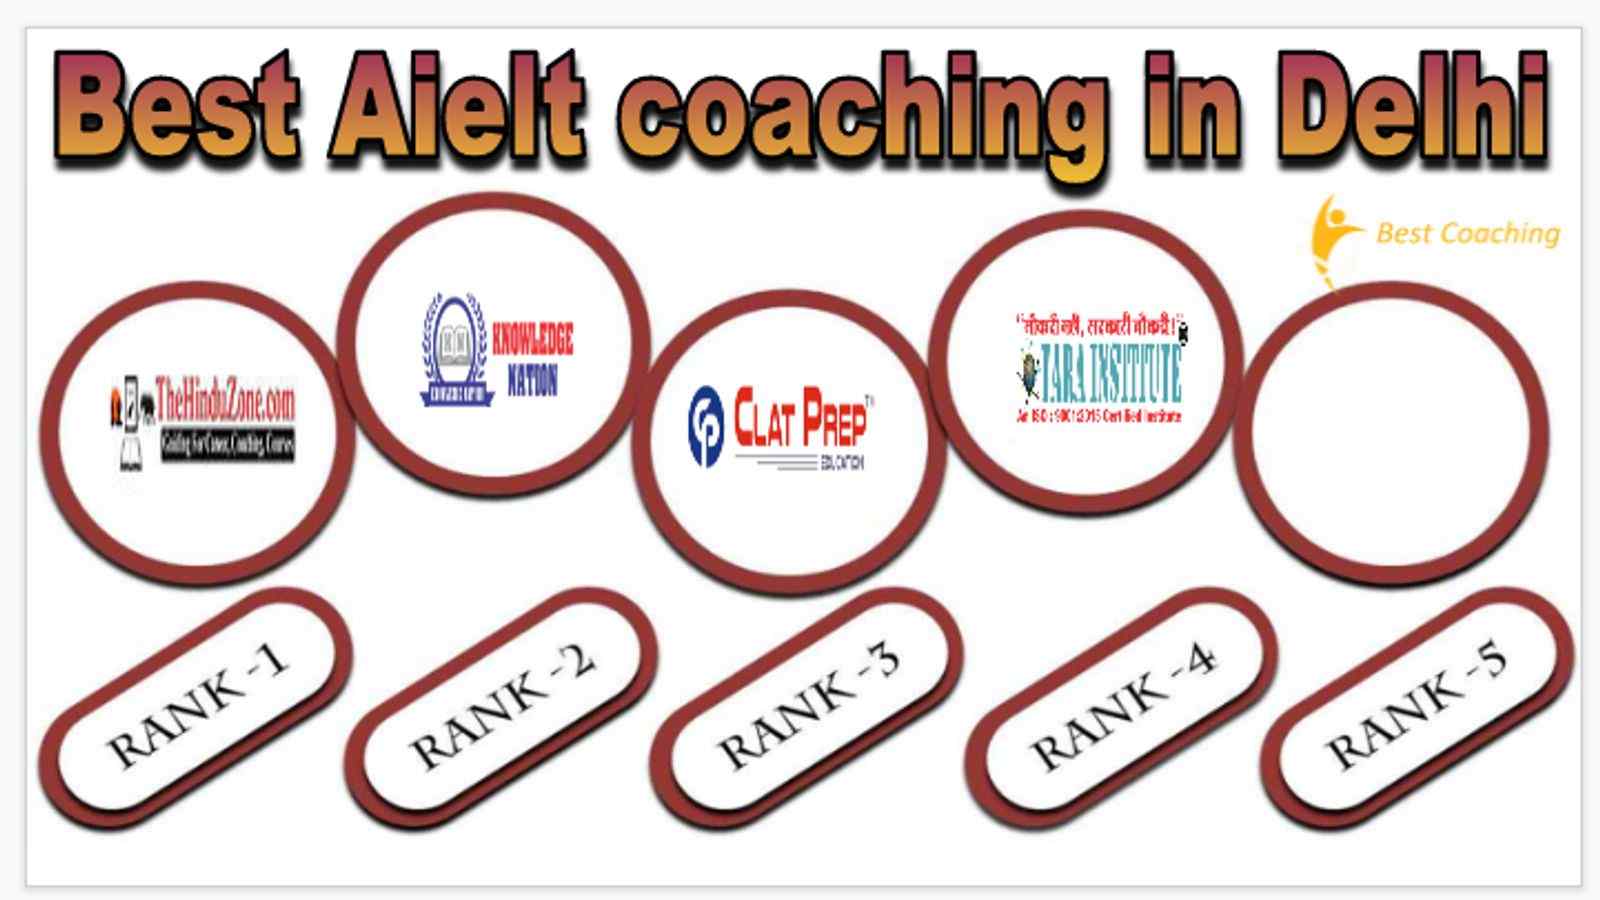 Best Aielt coaching in Delhi